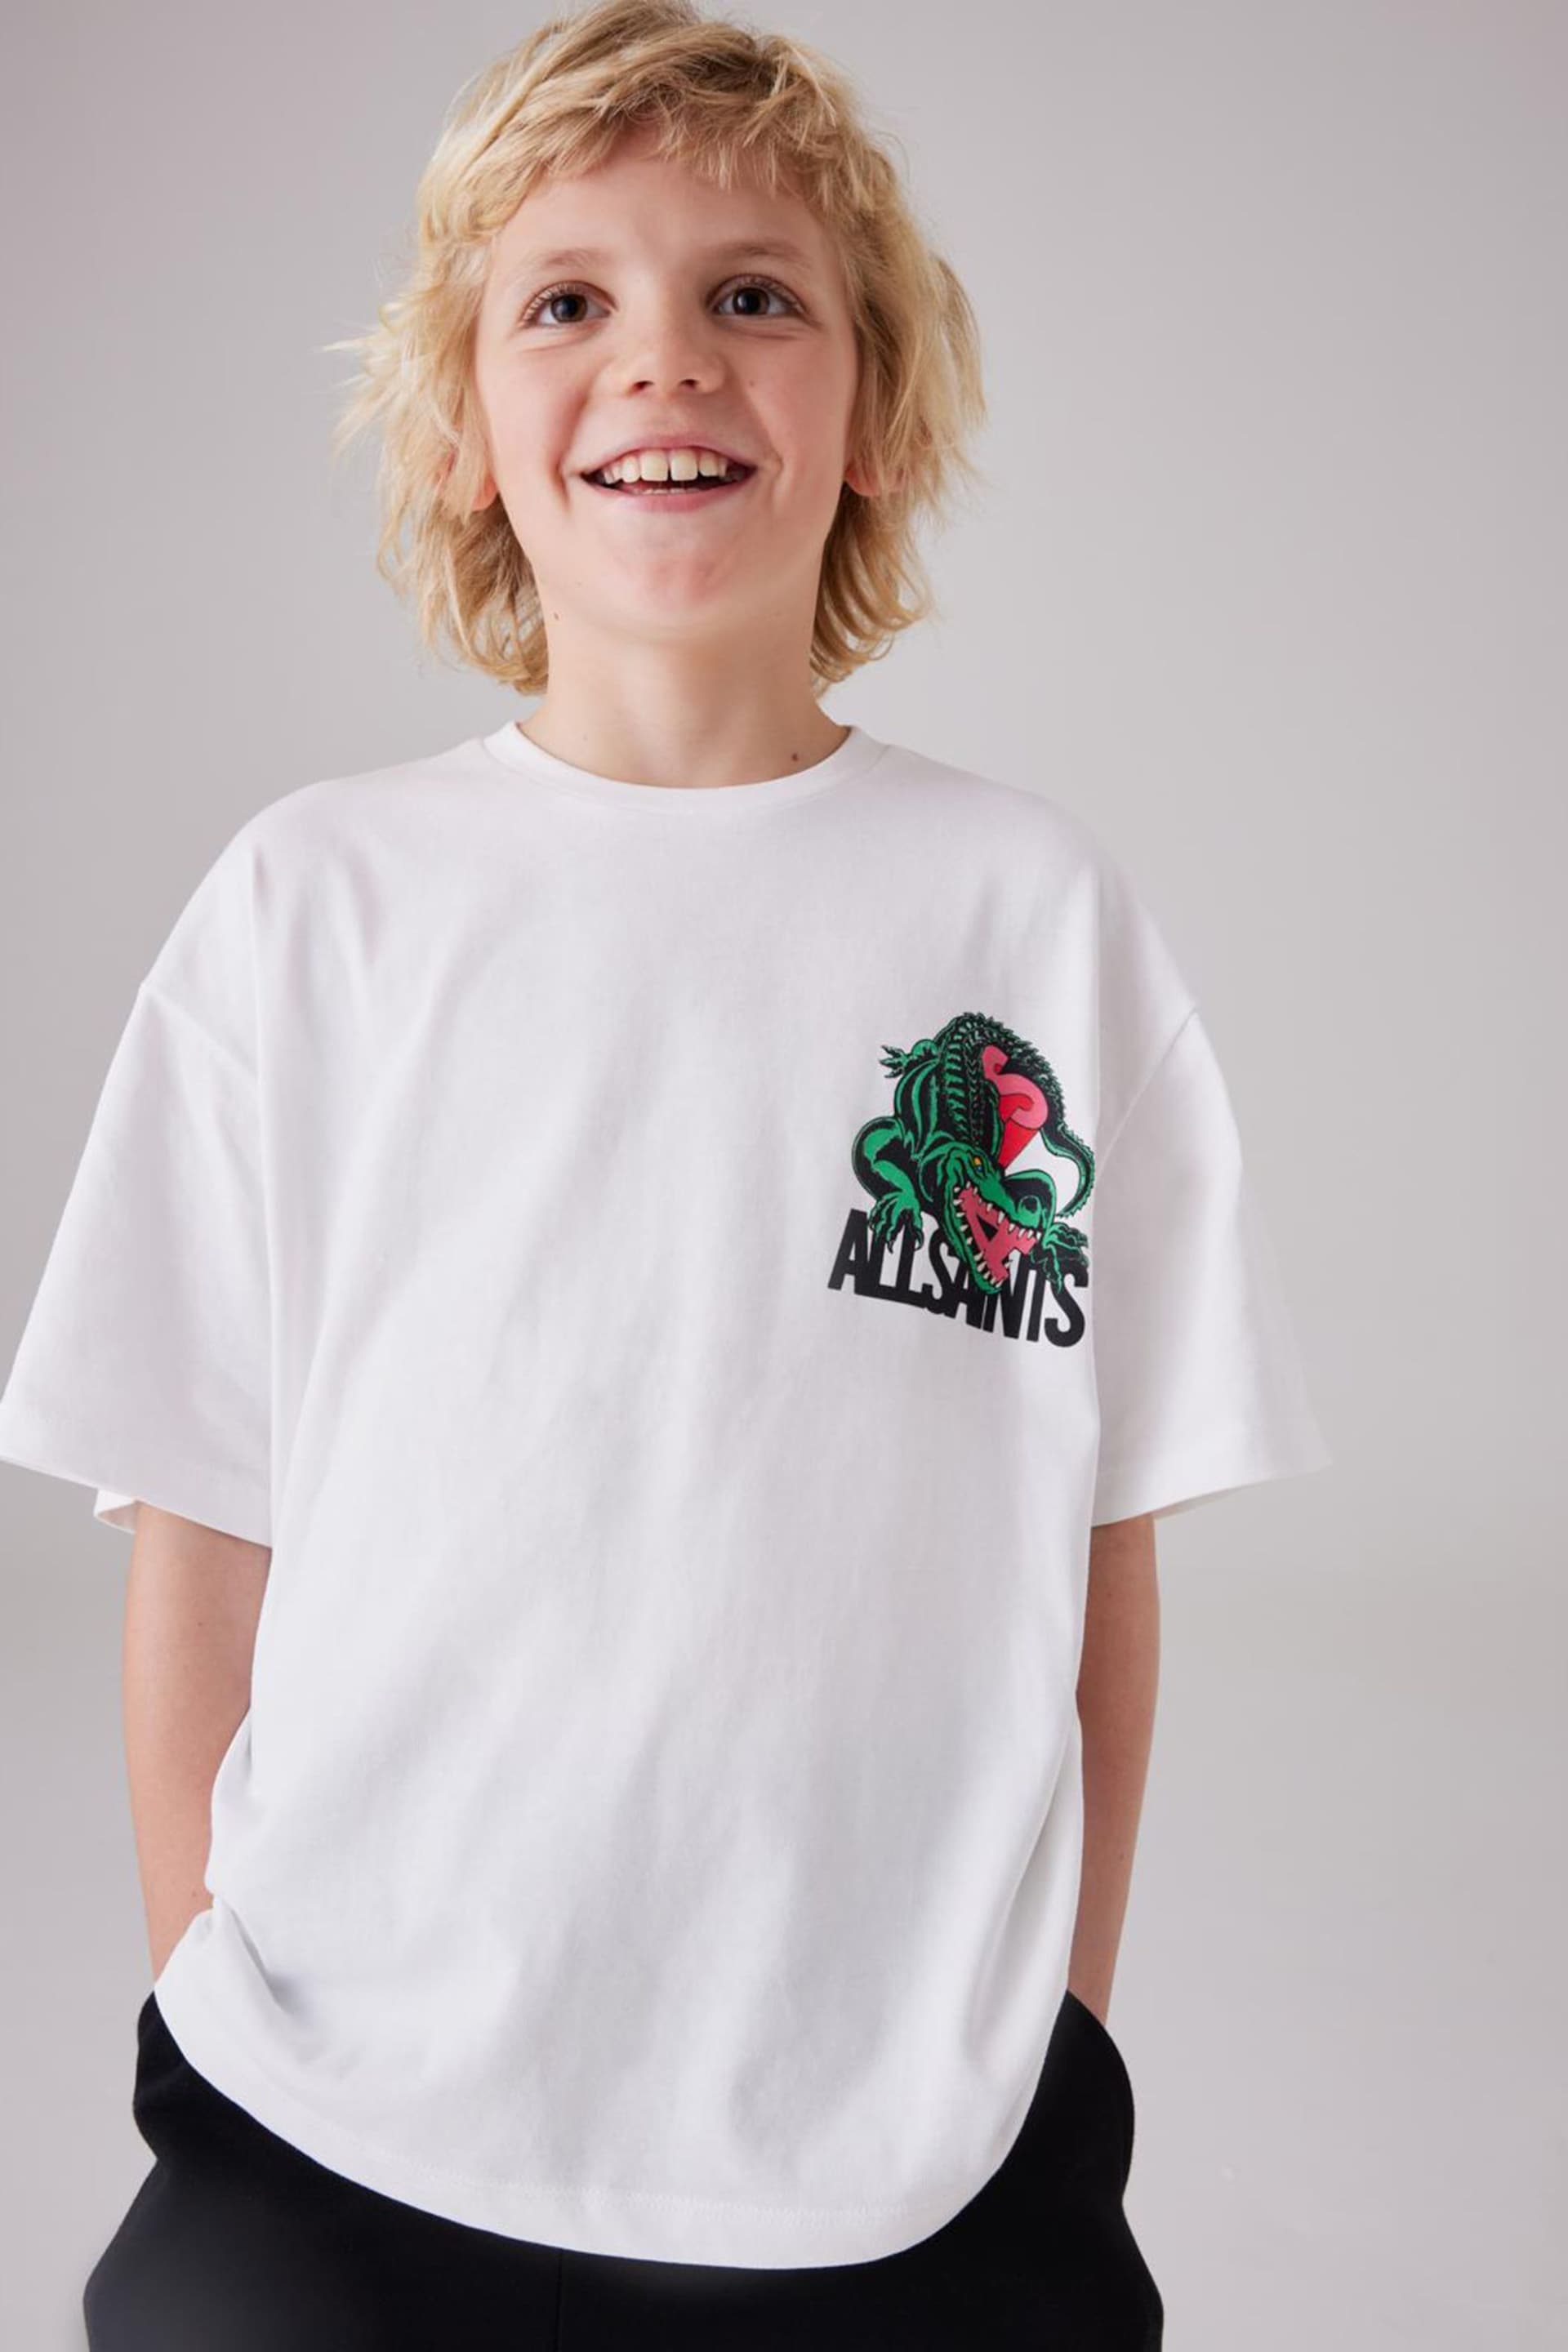 smALLSAINTS White/Gator Boys Graphic Oversized Crew T-Shirt - Image 1 of 8